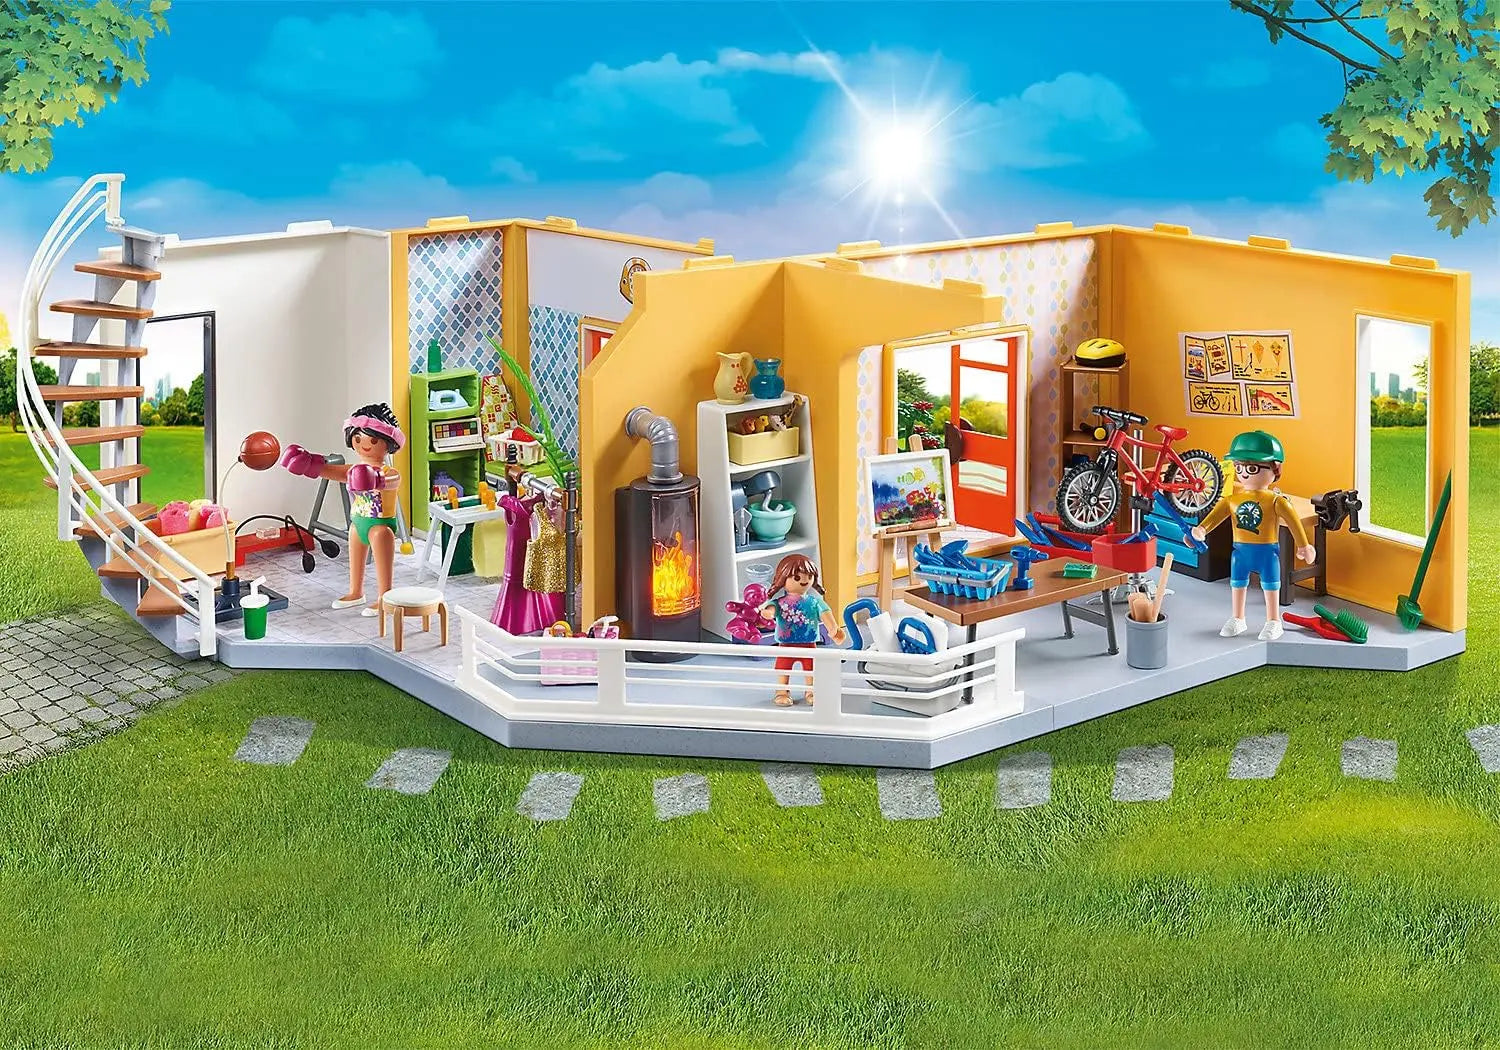 70986 'playmobil' City Life Etage Supplementaire Amenage Maison